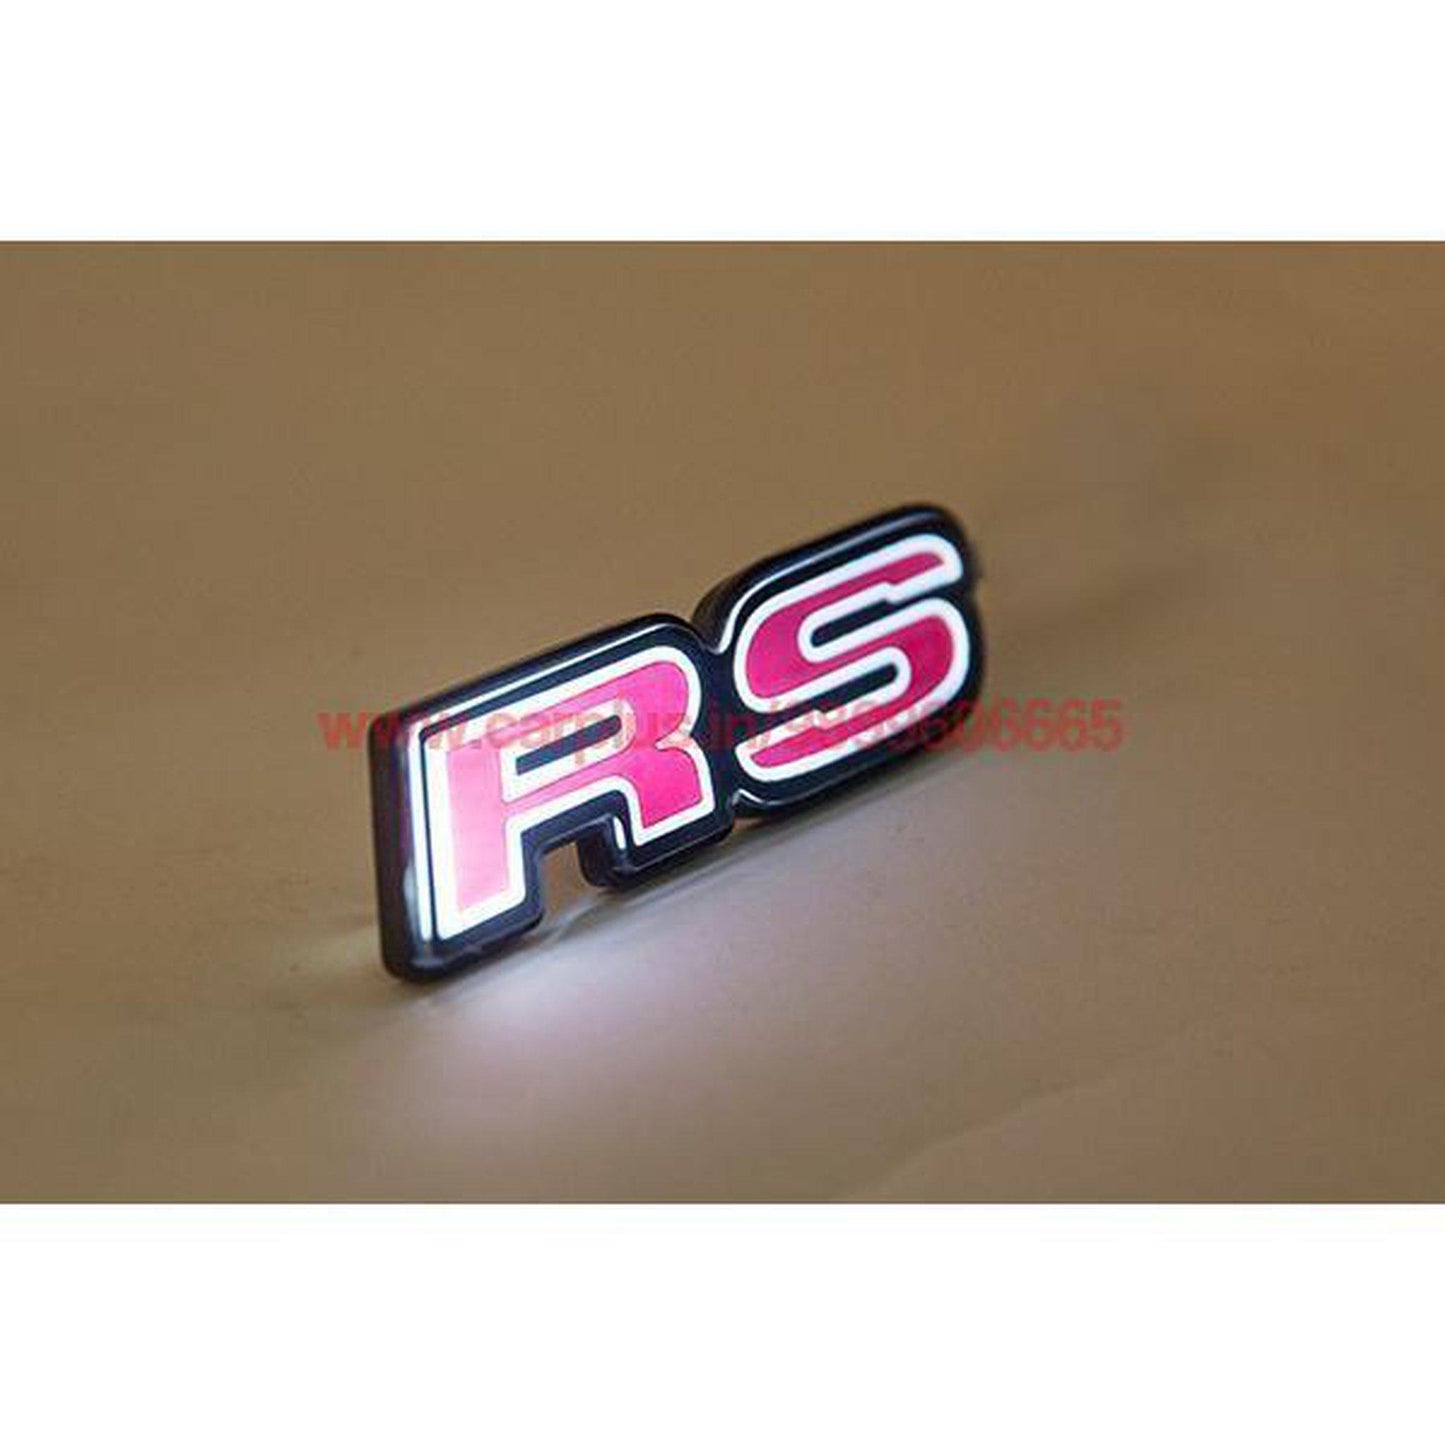 KMH RS Car Styling Auto Grille Badge Emblem Logo Light For Audi